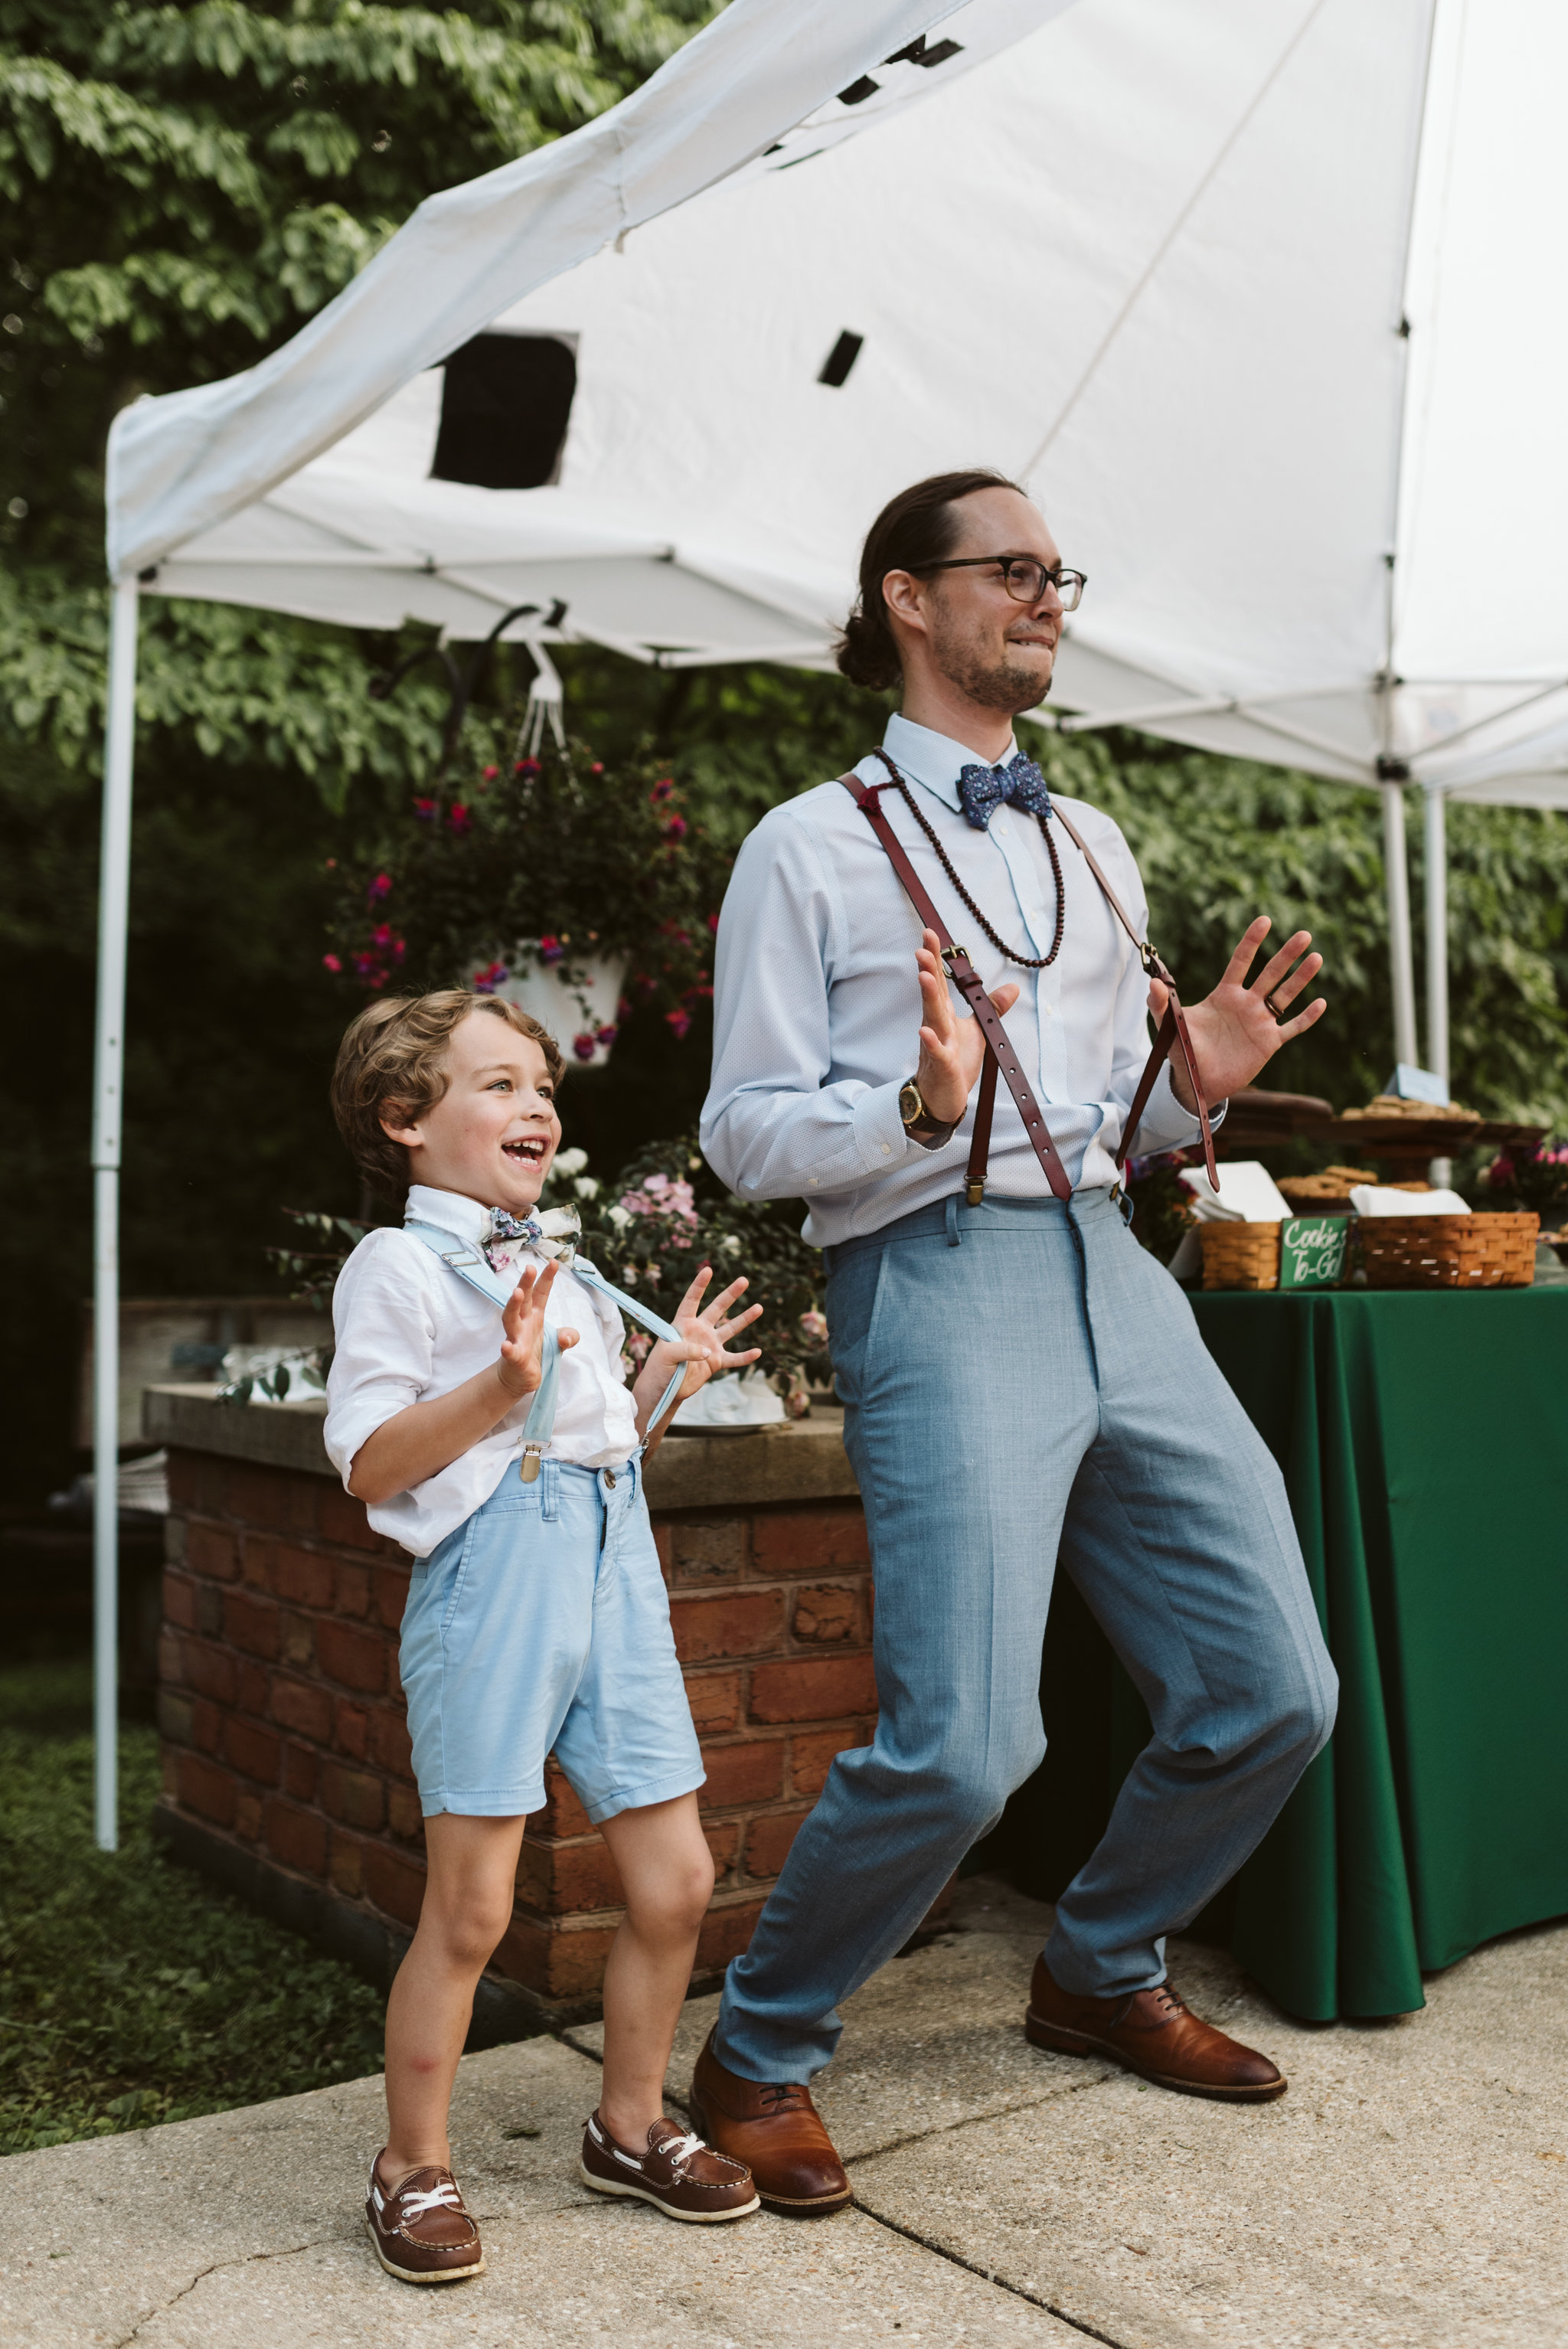  Annapolis, Quaker Wedding, Maryland Wedding Photographer, Intimate, Small Wedding, Vintage, DIY, Groom and Ring Bearer Dancing, Suspenders 